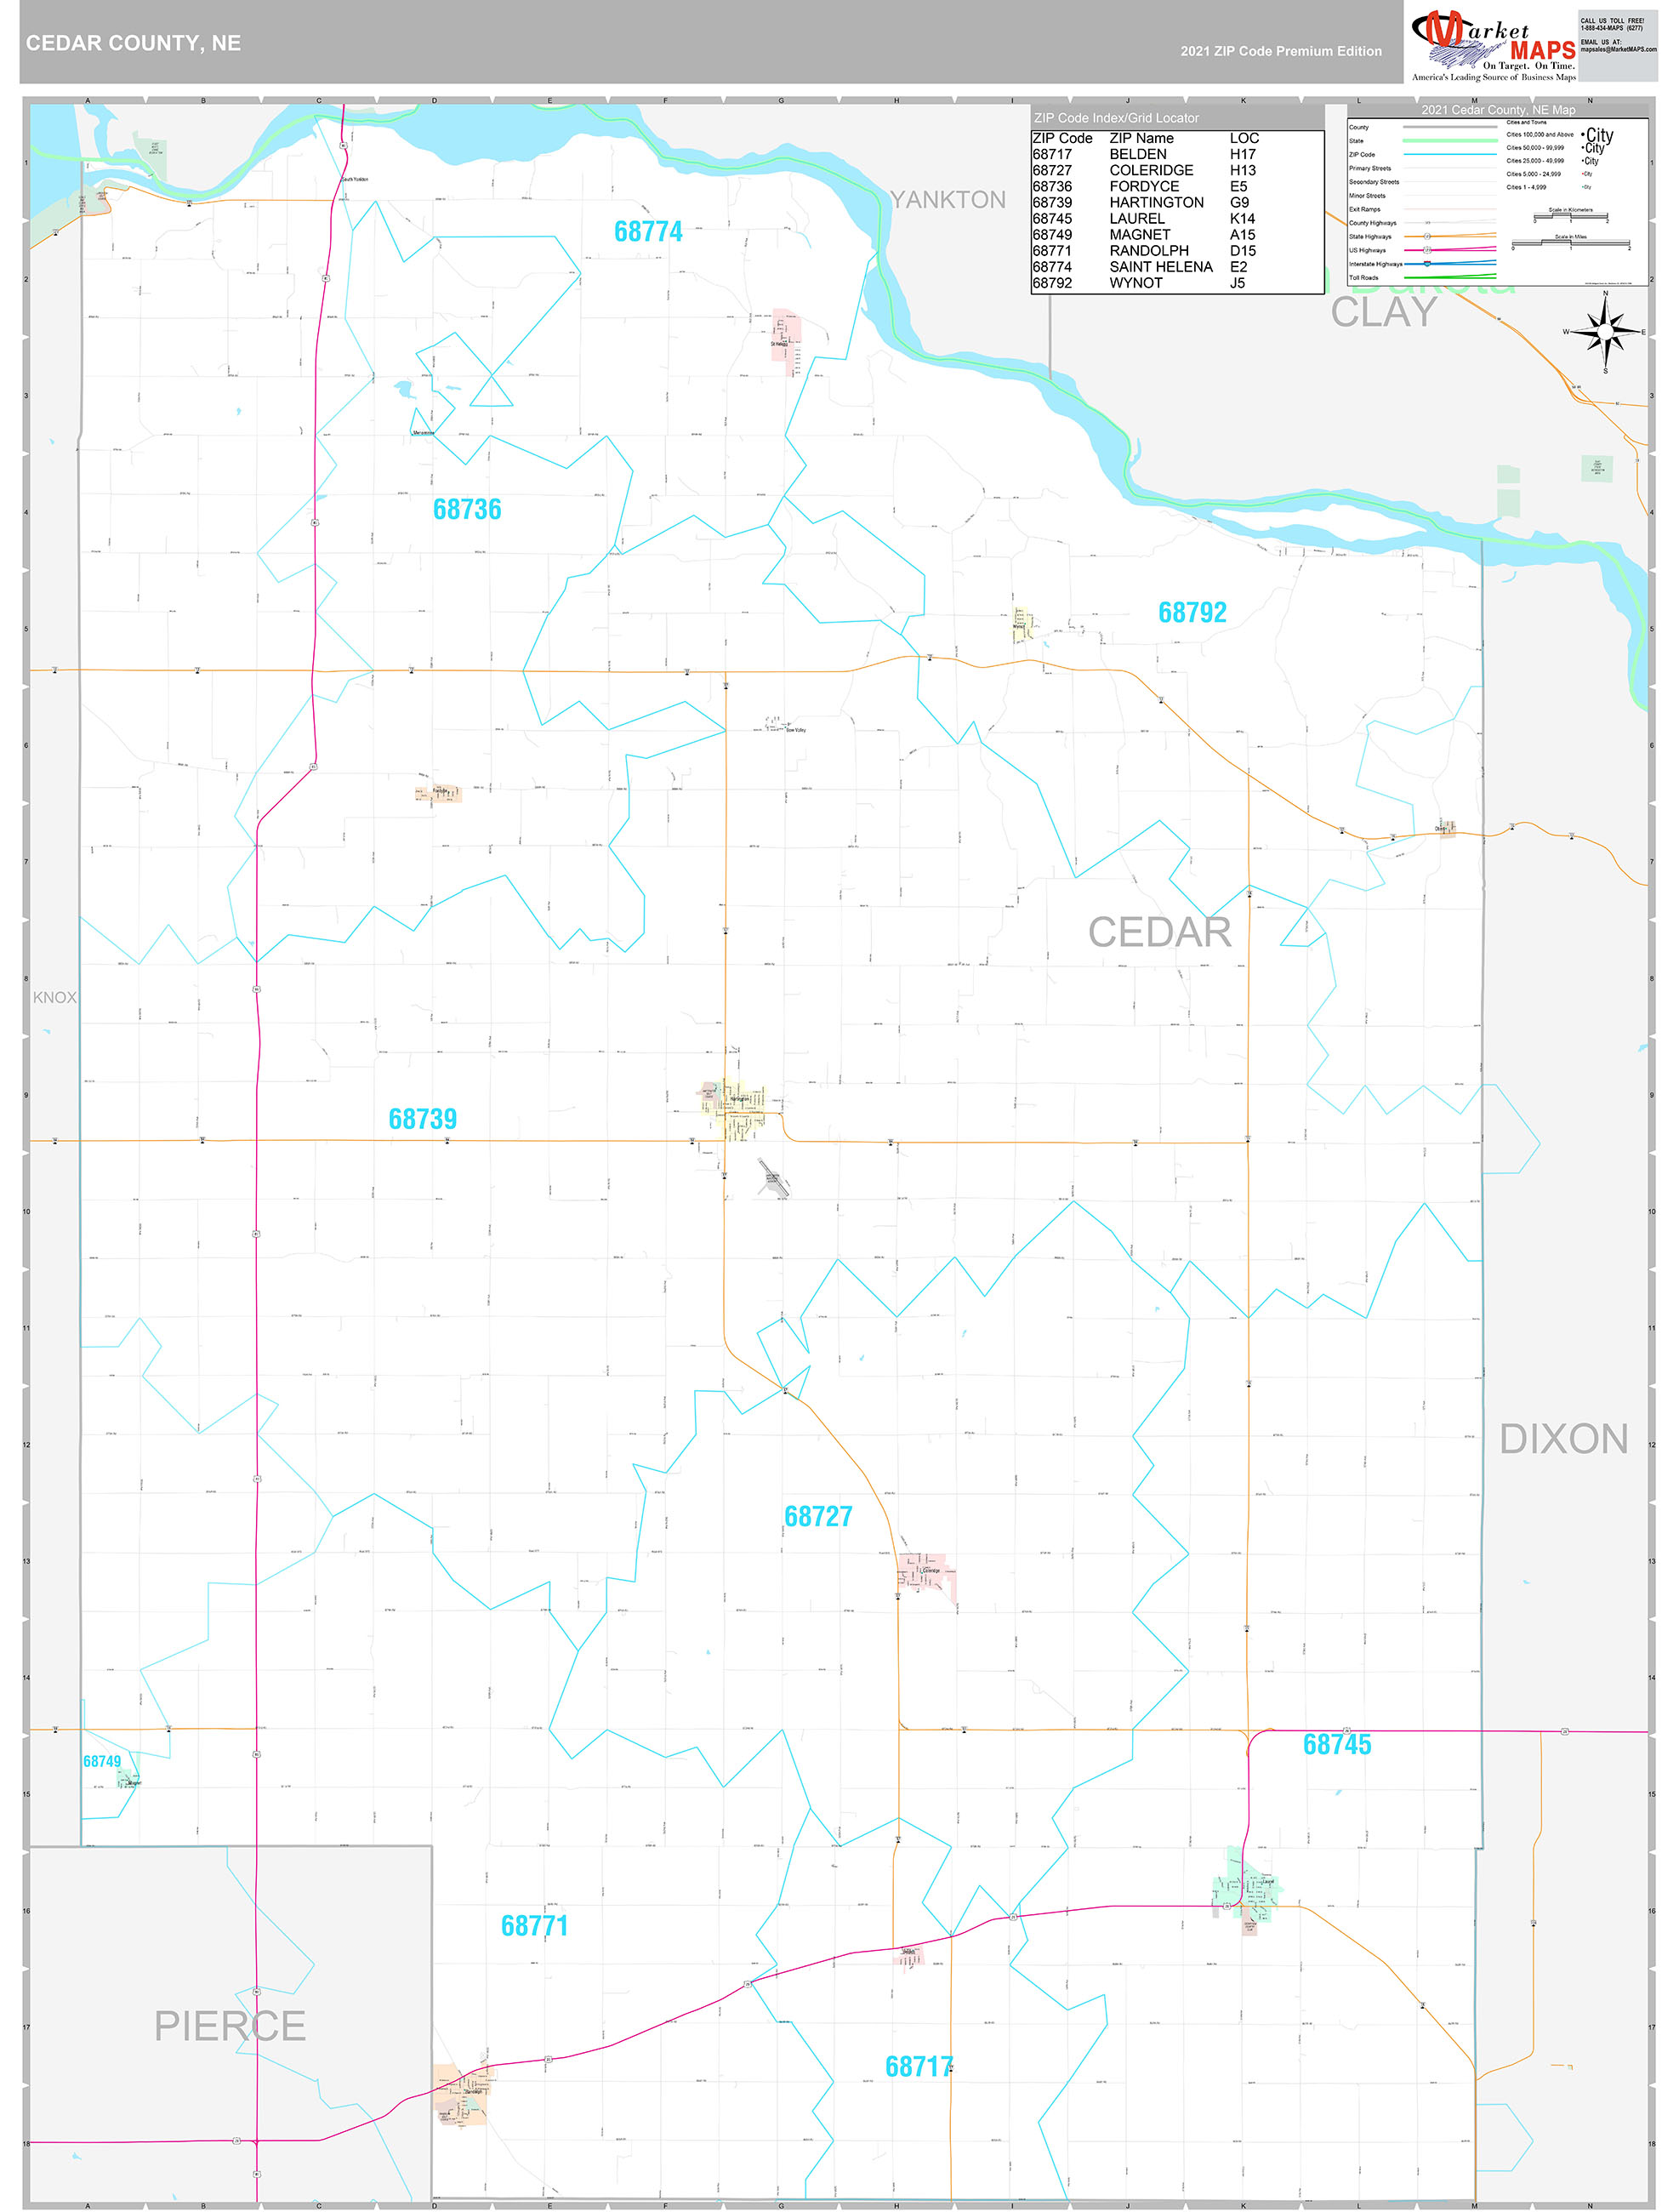 Cedar County NE Wall Map Premium Style by MarketMAPS MapSales